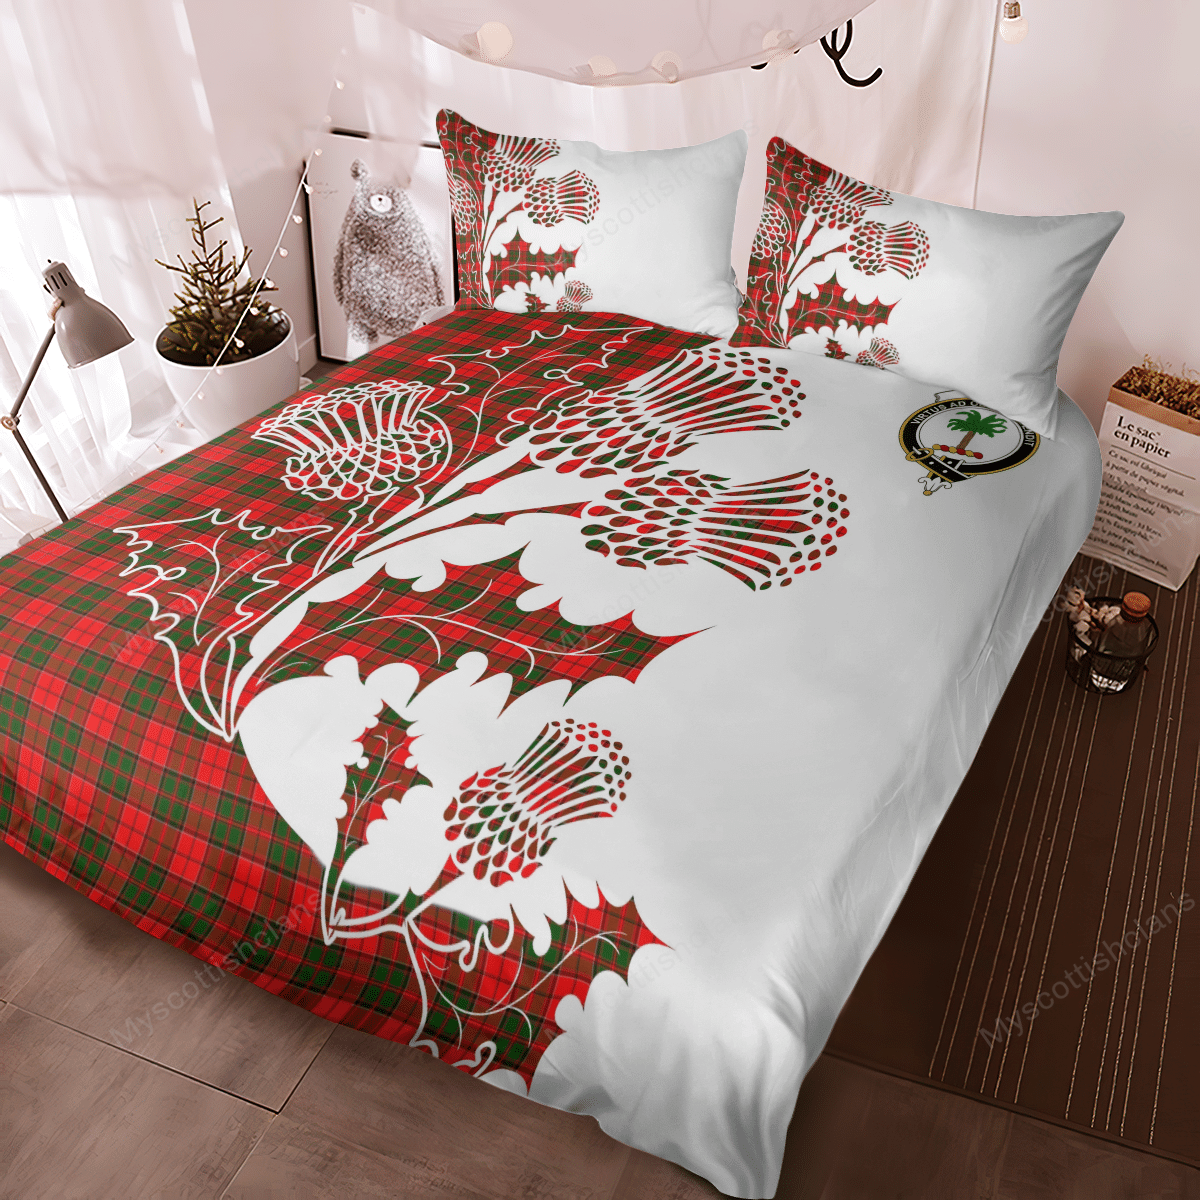 Cairns Tartan Crest Bedding Set - Thistle Style